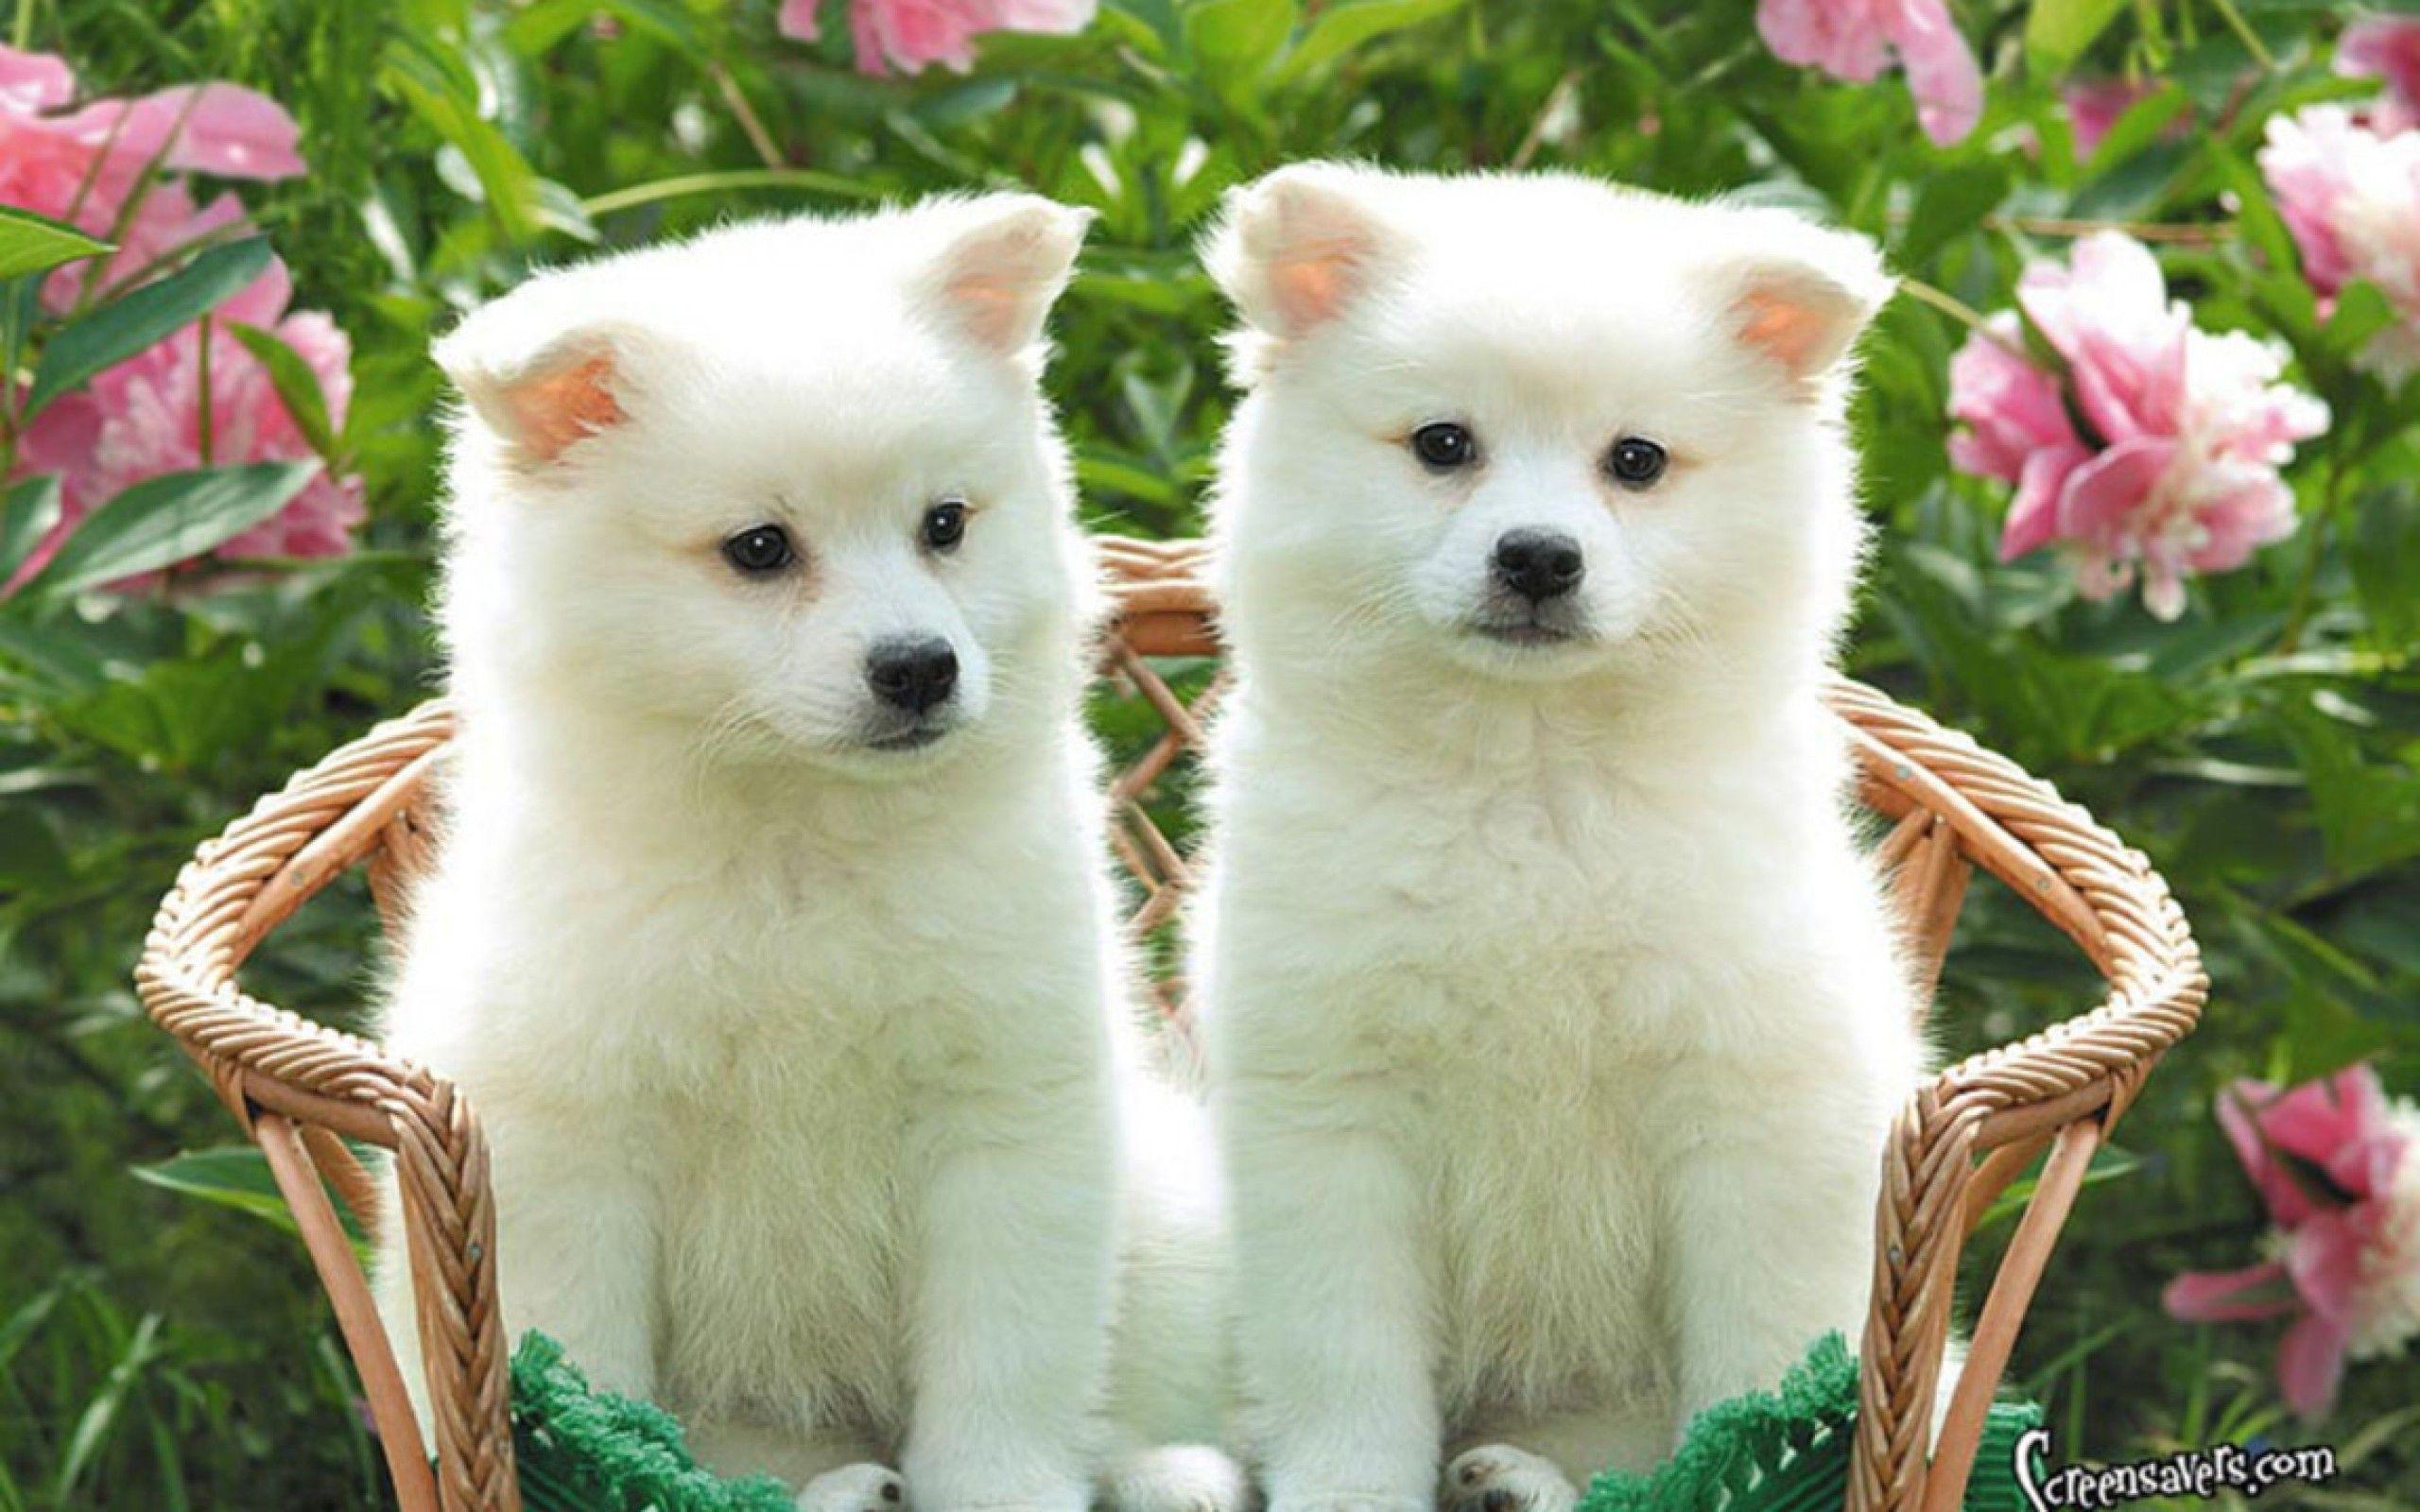 Belajoo.com, : Cute Dog Wallpaper HD. Cute Baby Dog